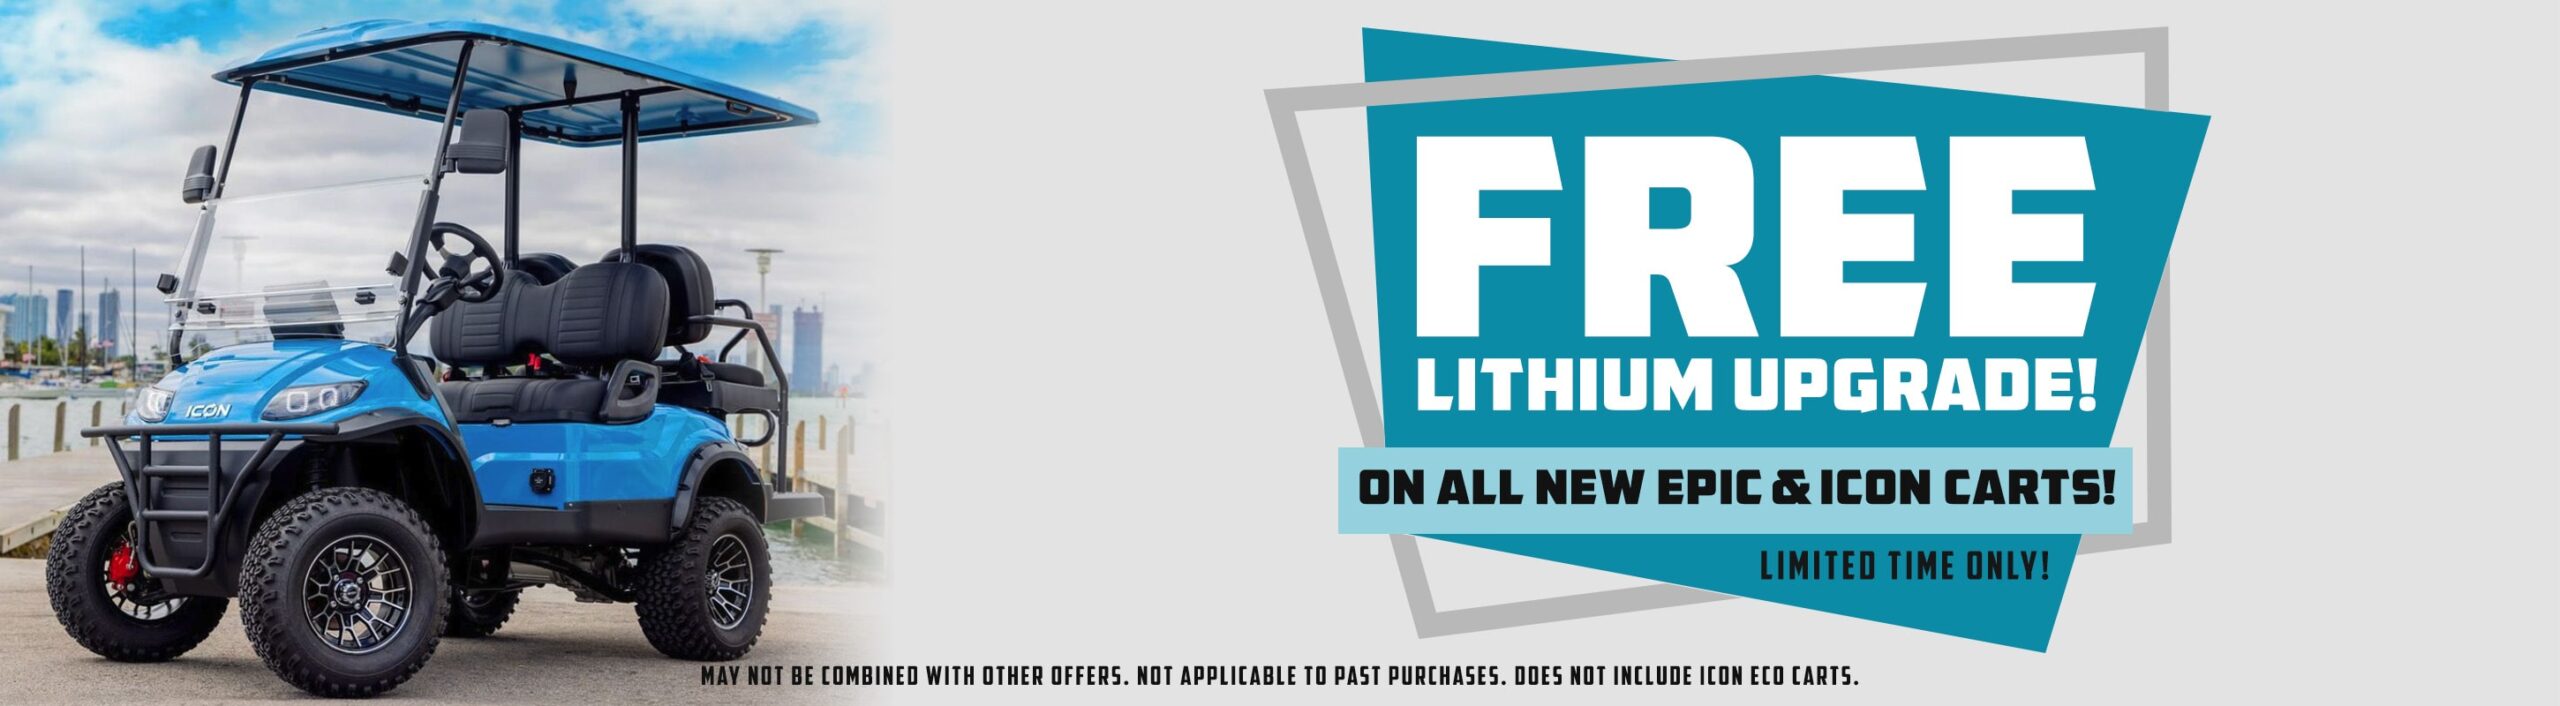 FREE Lithium Upgrade Promotion Banner